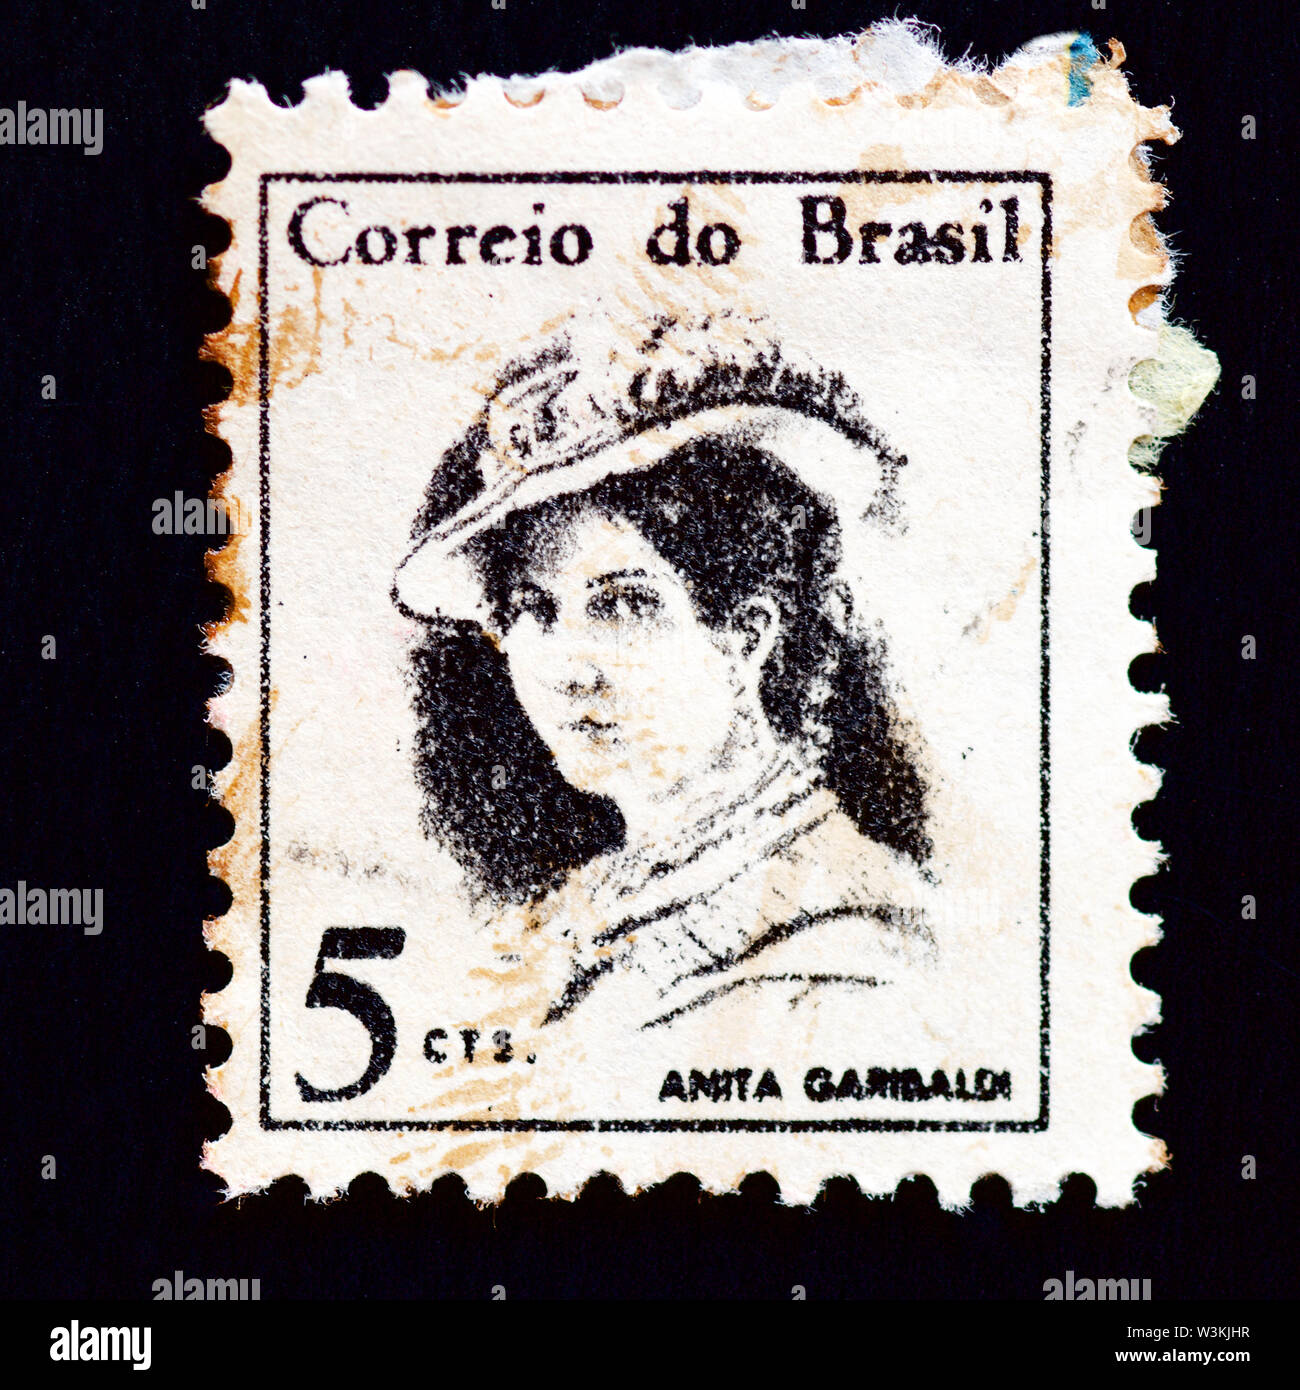 Brazil Postage Stamp - 1967 Stock Photo - Alamy